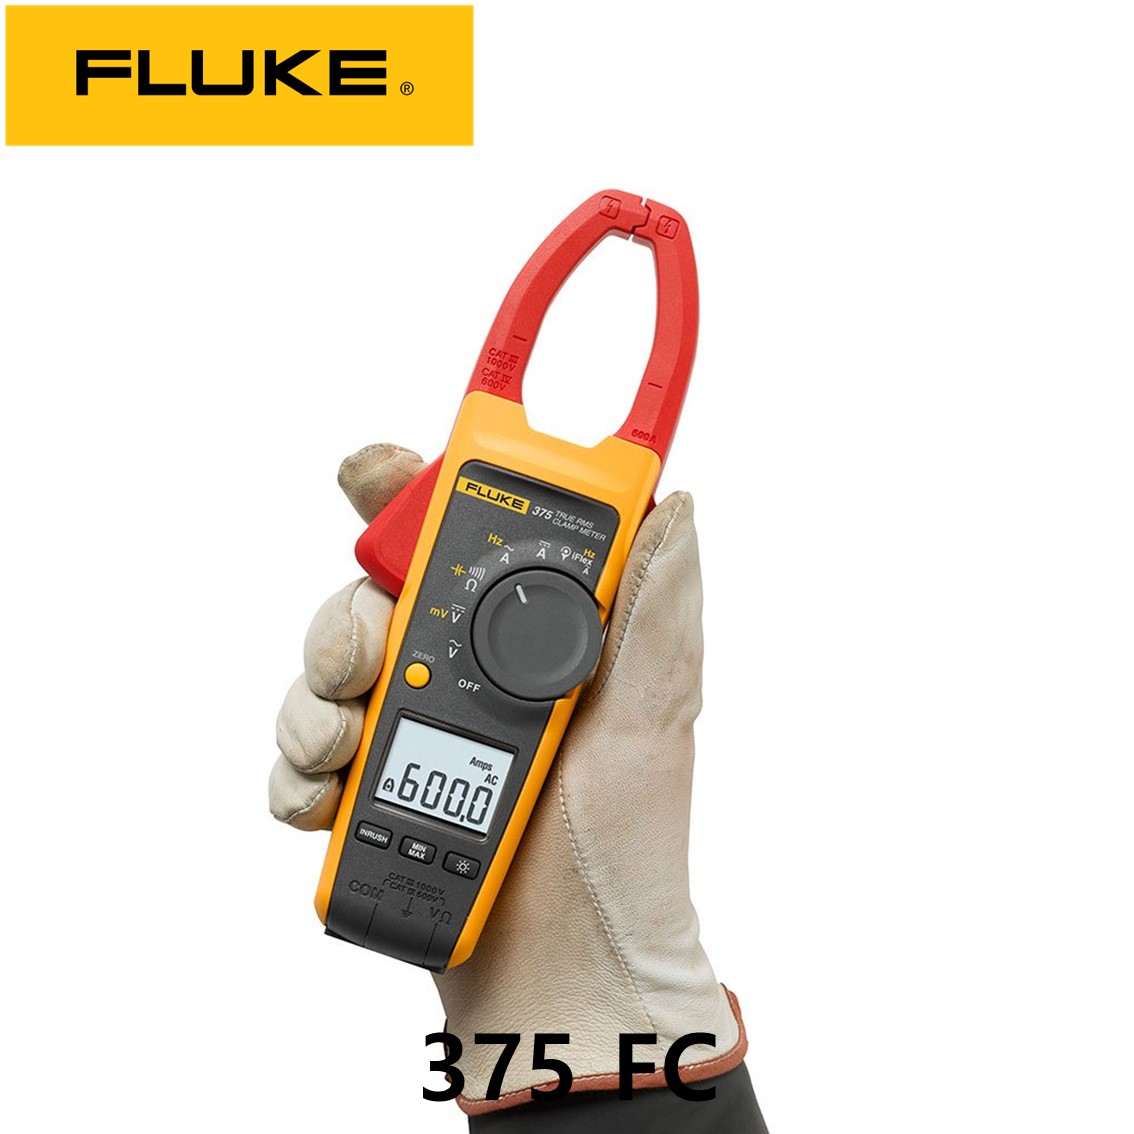 [ FLUKE 375 FC ] 플루크 클램프미터  600A AC/DC 클램프메타, AC/DC 전압측정, 주파수 측정